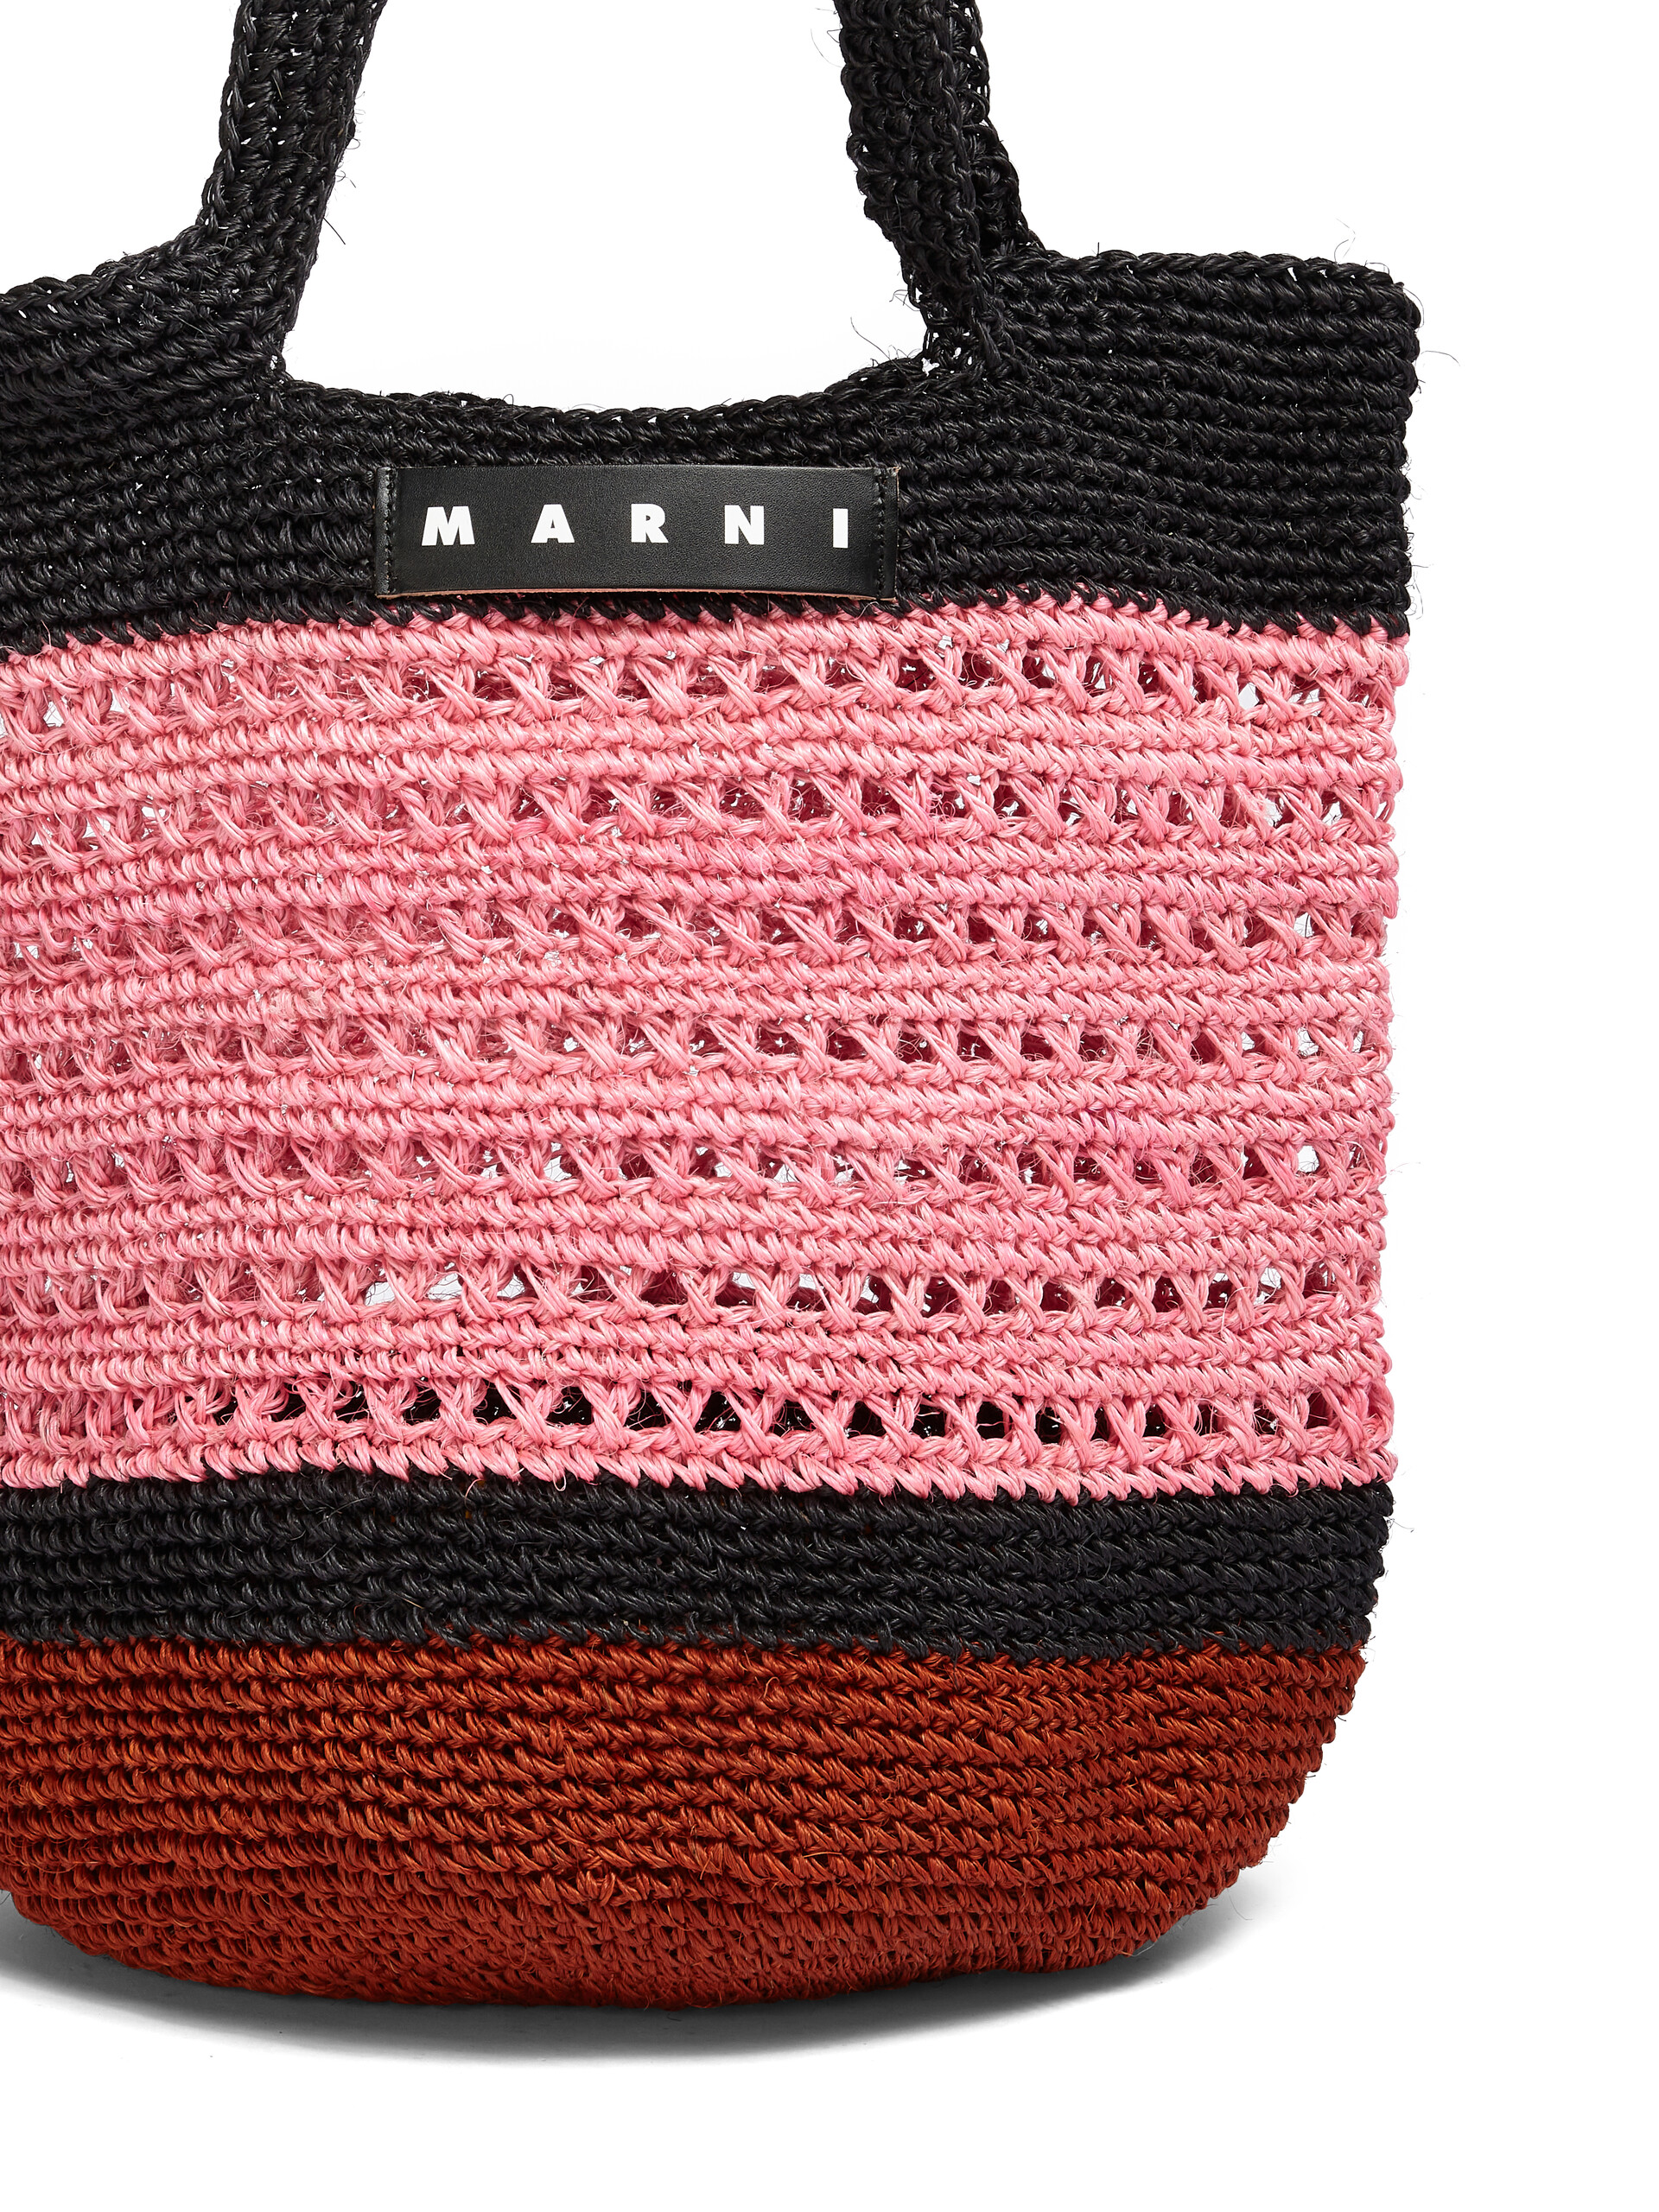 MARNI MARKET DRUM bag in pink and black natural fiber - Shopping Bags - Image 4